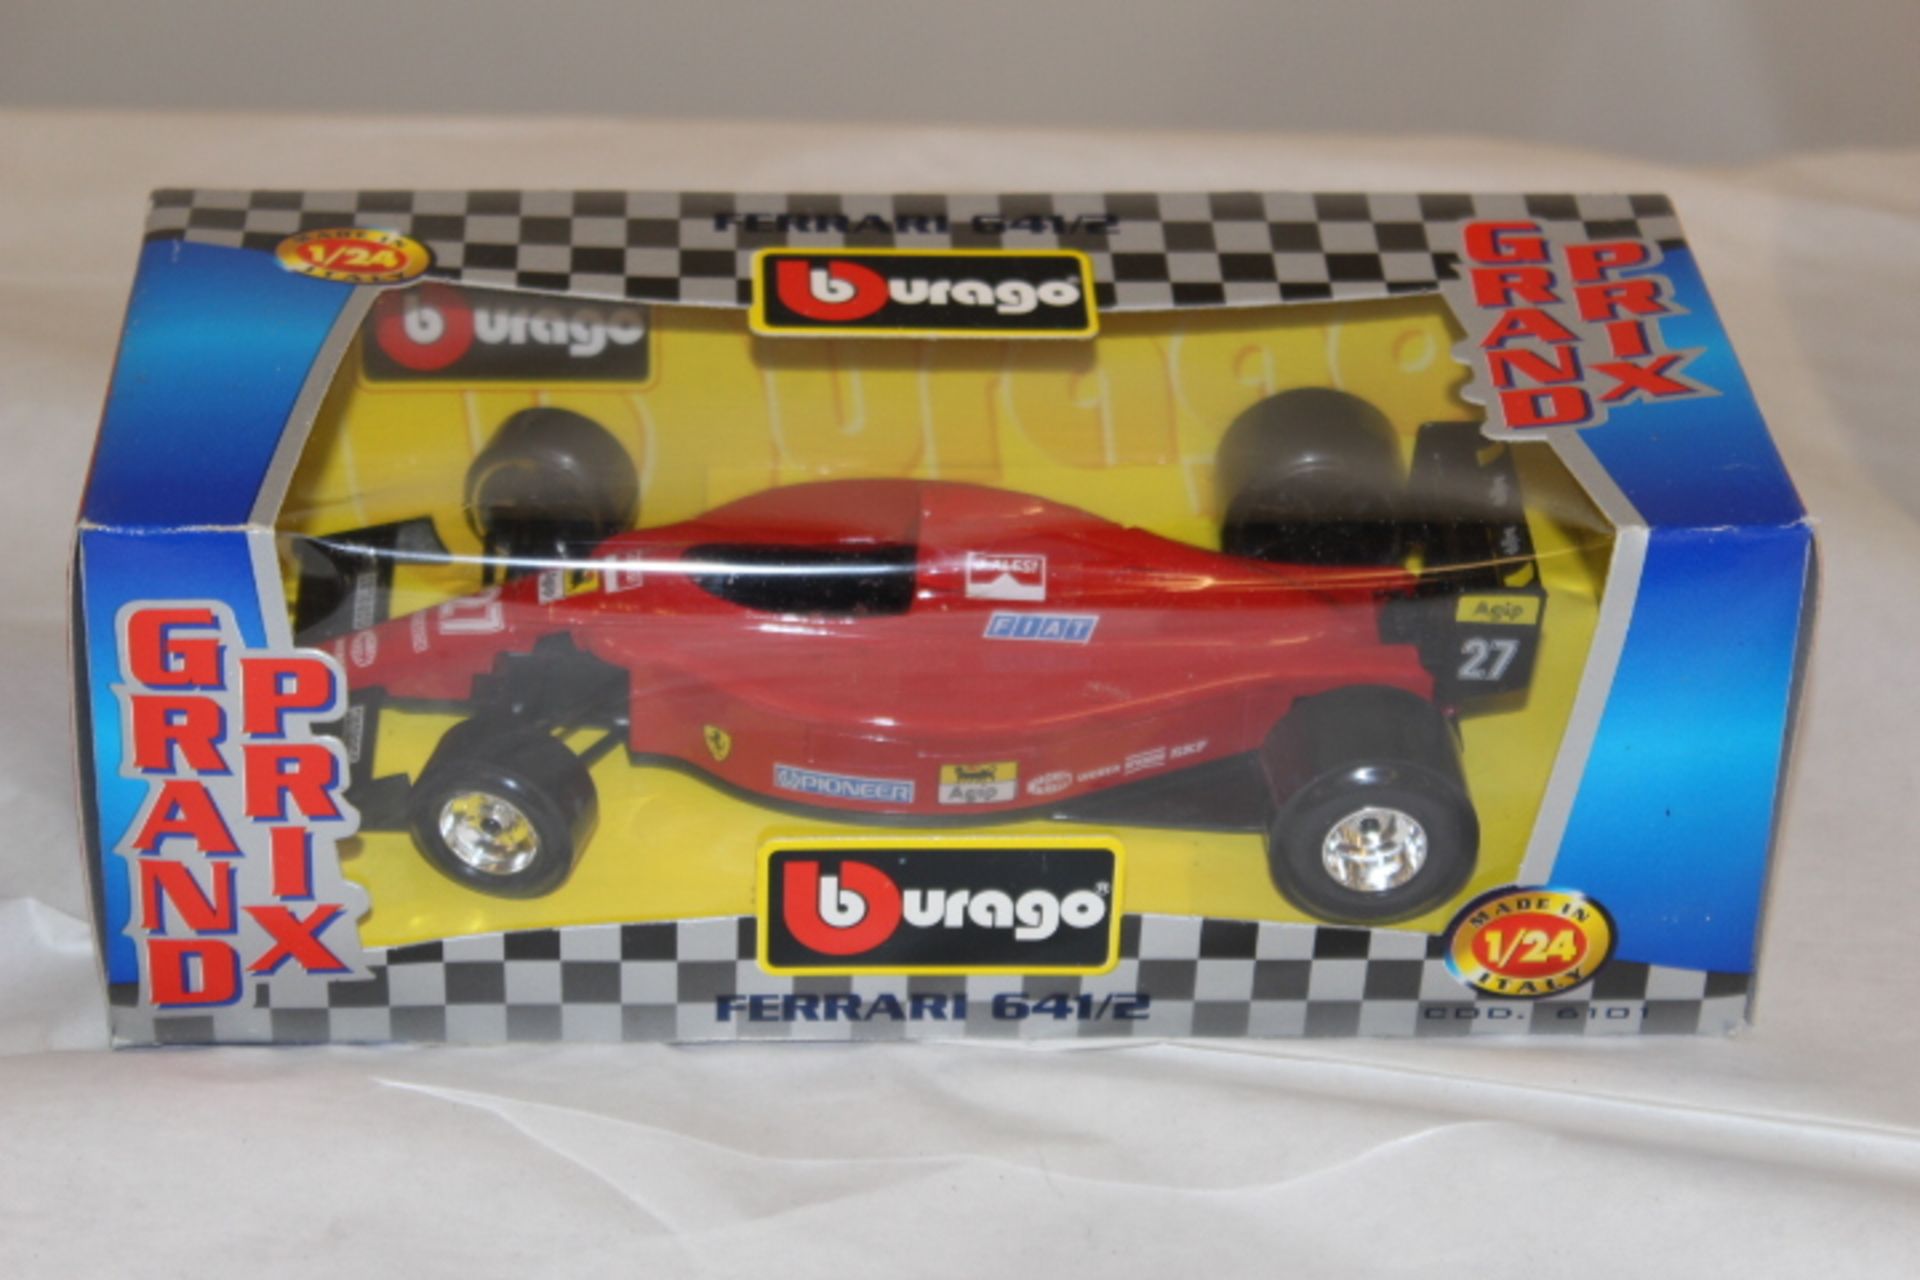 Burago Grand Prix Ferrari 641/2 collectable model car